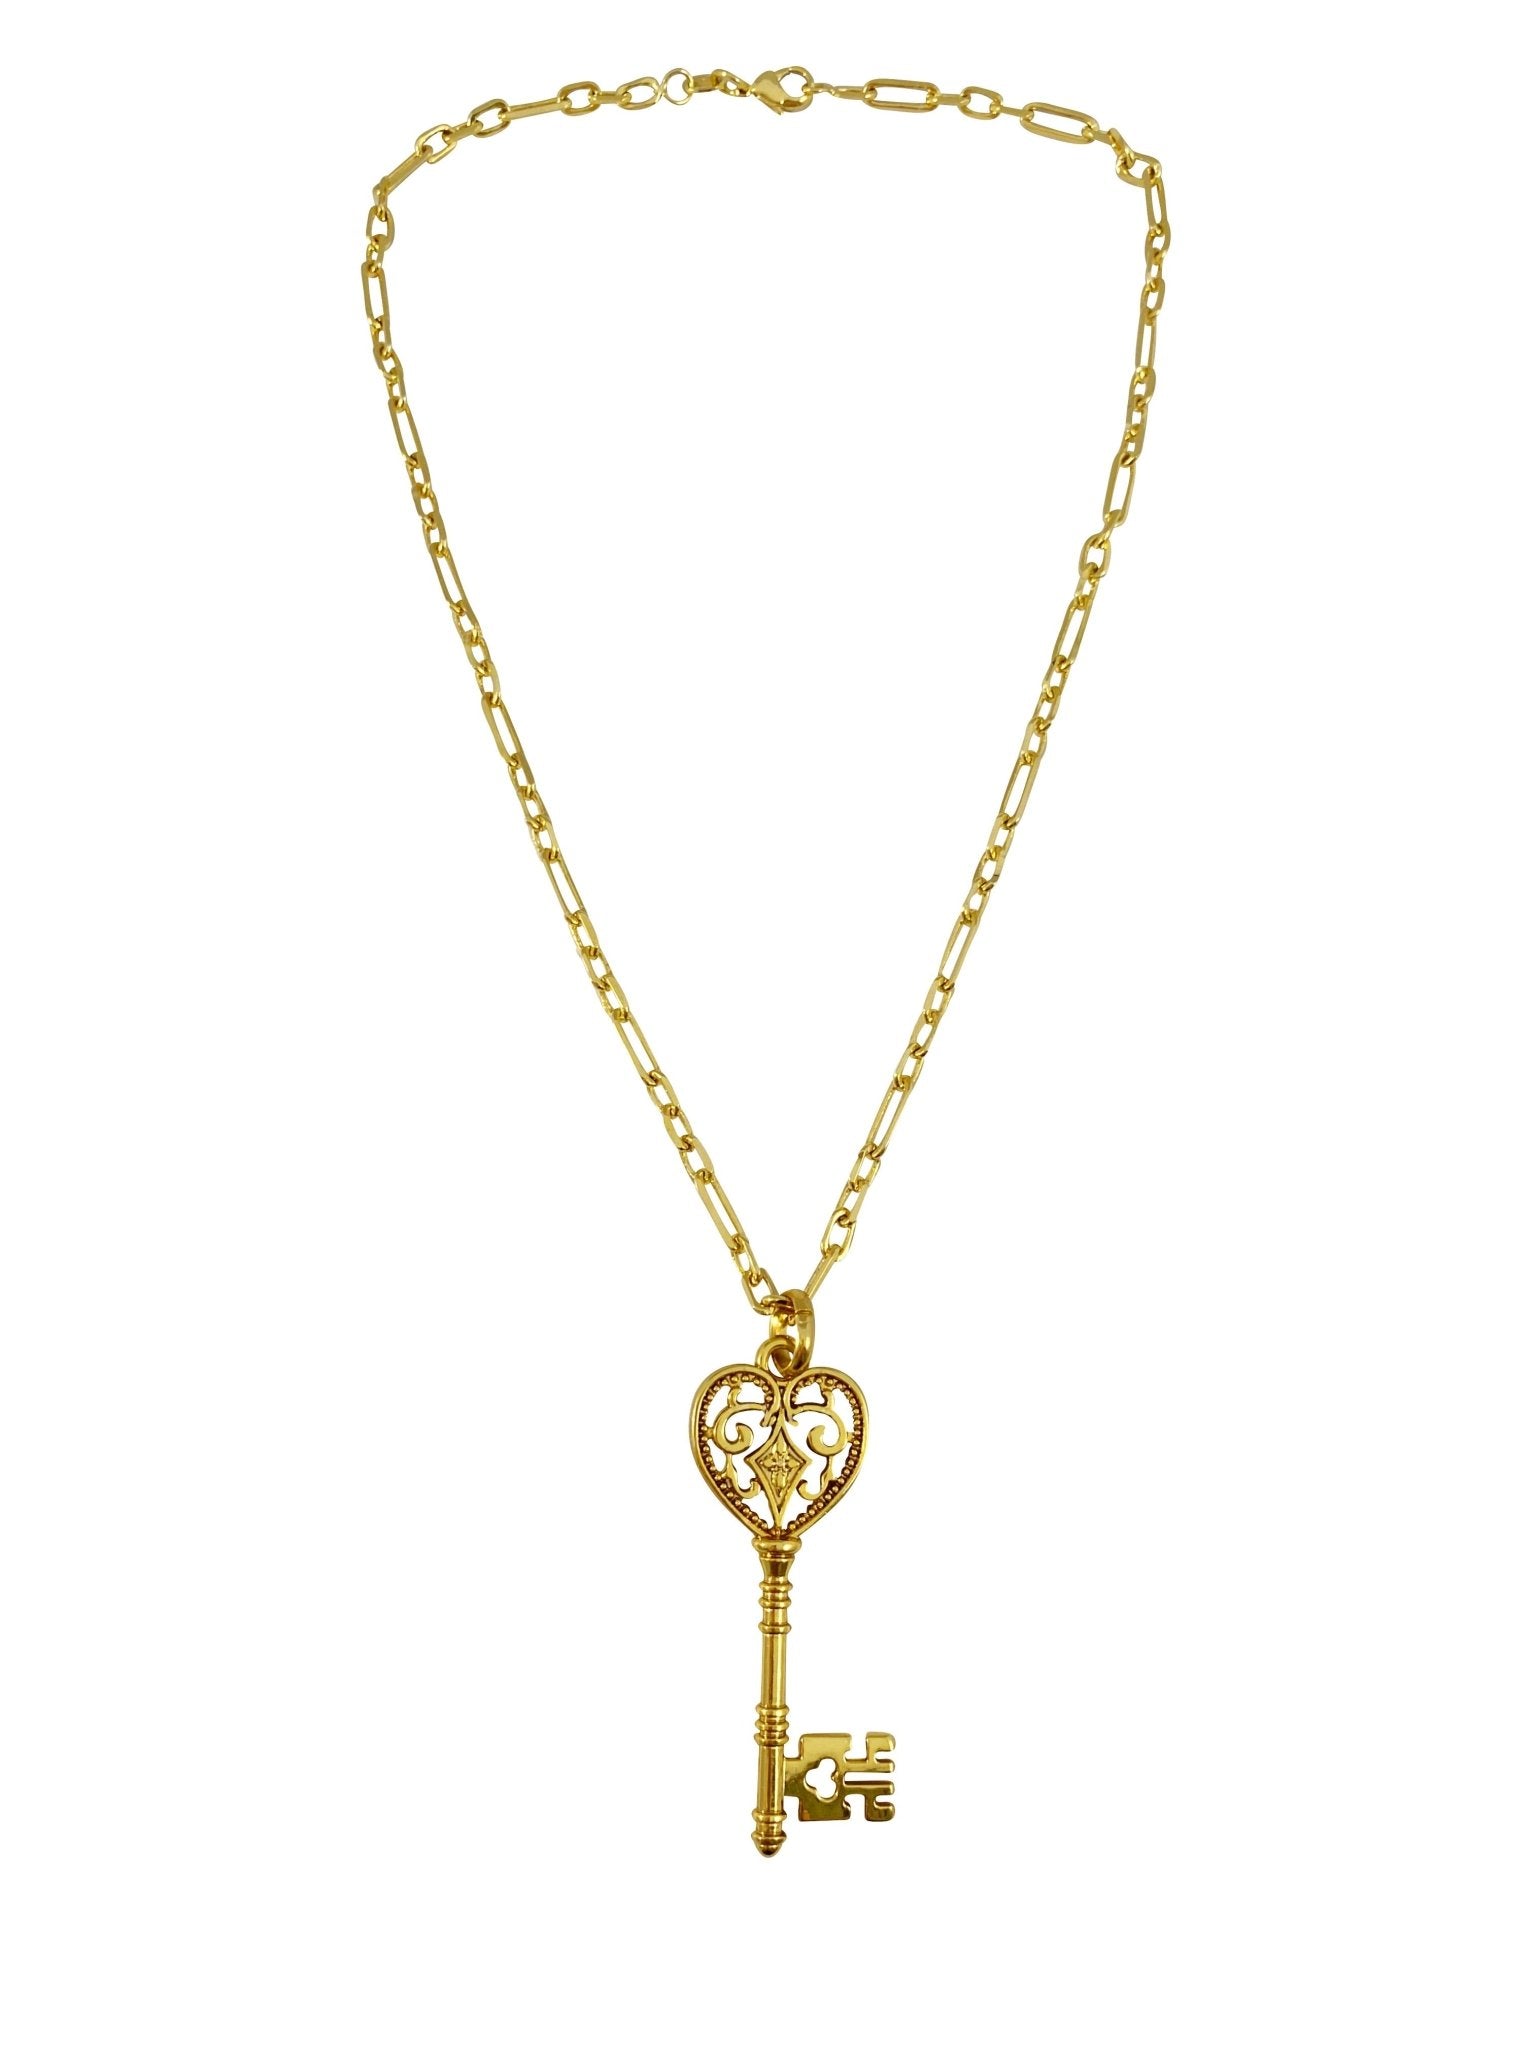 Key Necklace - NOA - Necklace